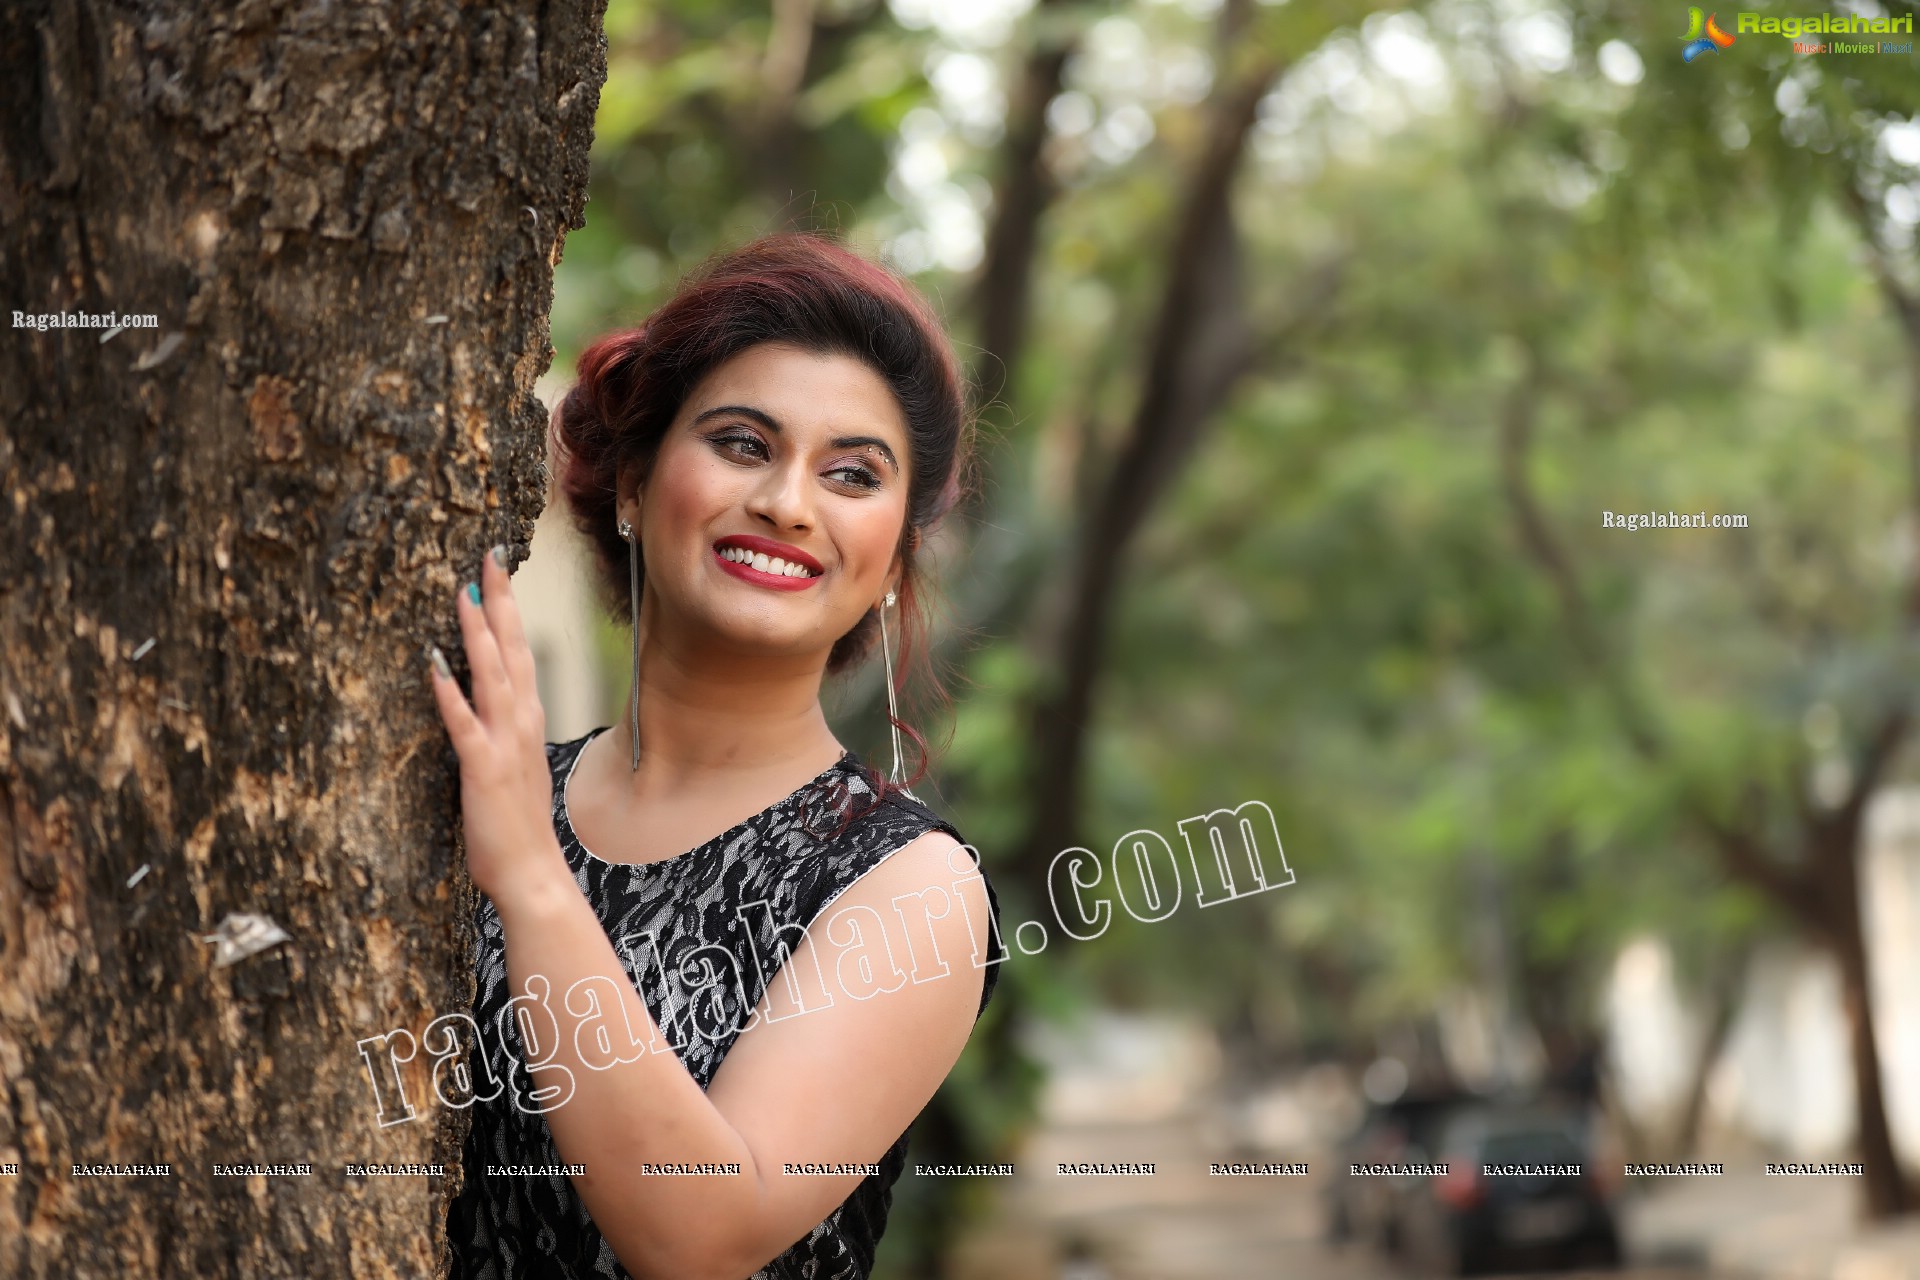 Gunnjan Aras in Slit Black Printed Long Dress Exclusive Photo Shoot